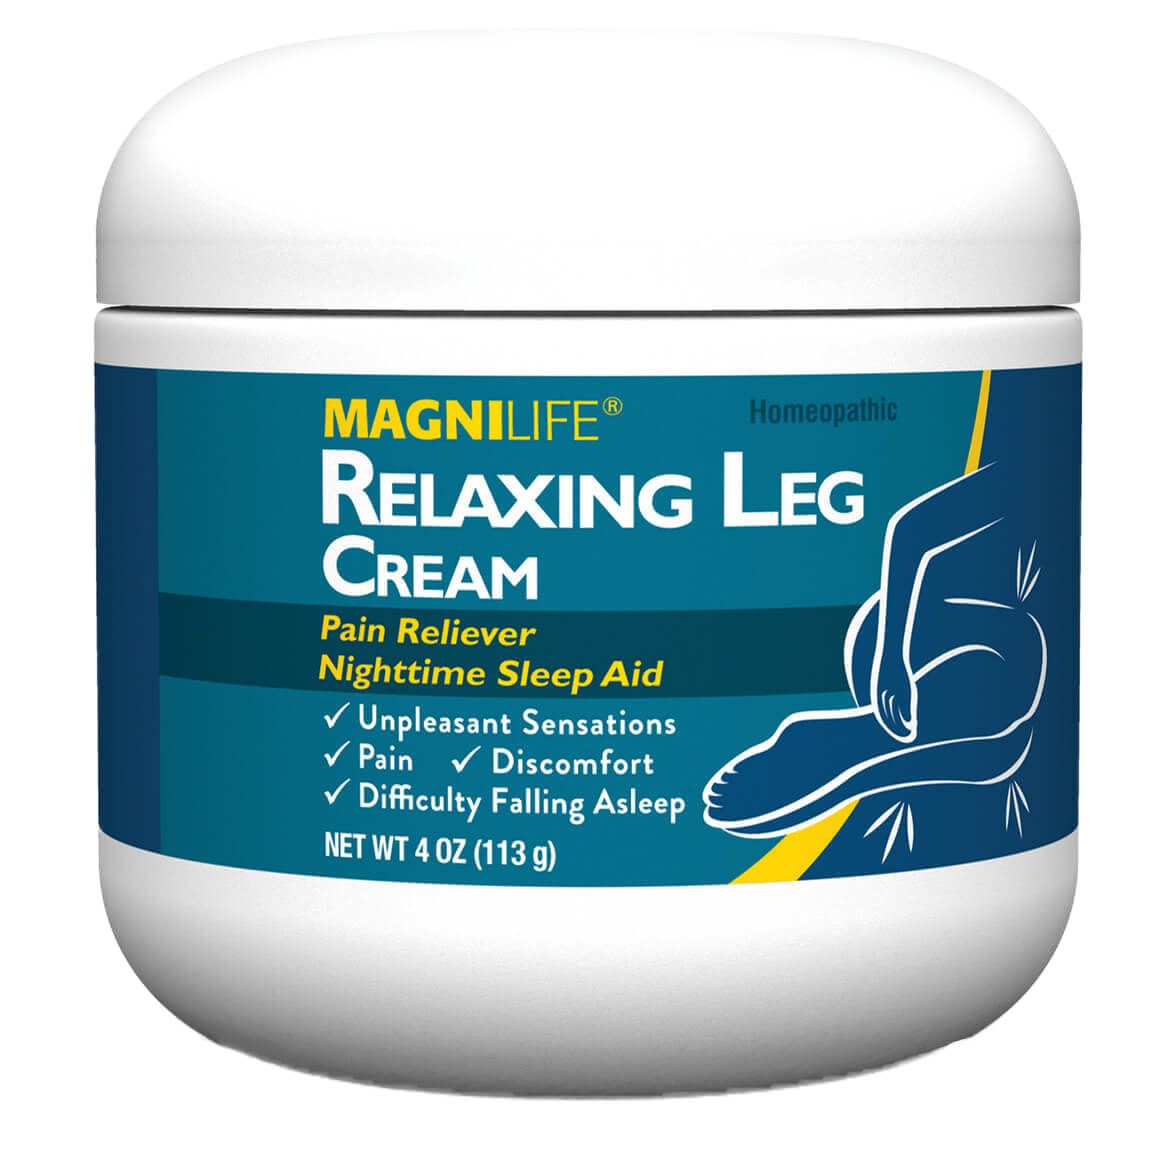 MagniLife Relaxing Leg Cream PM + '-' + 304636